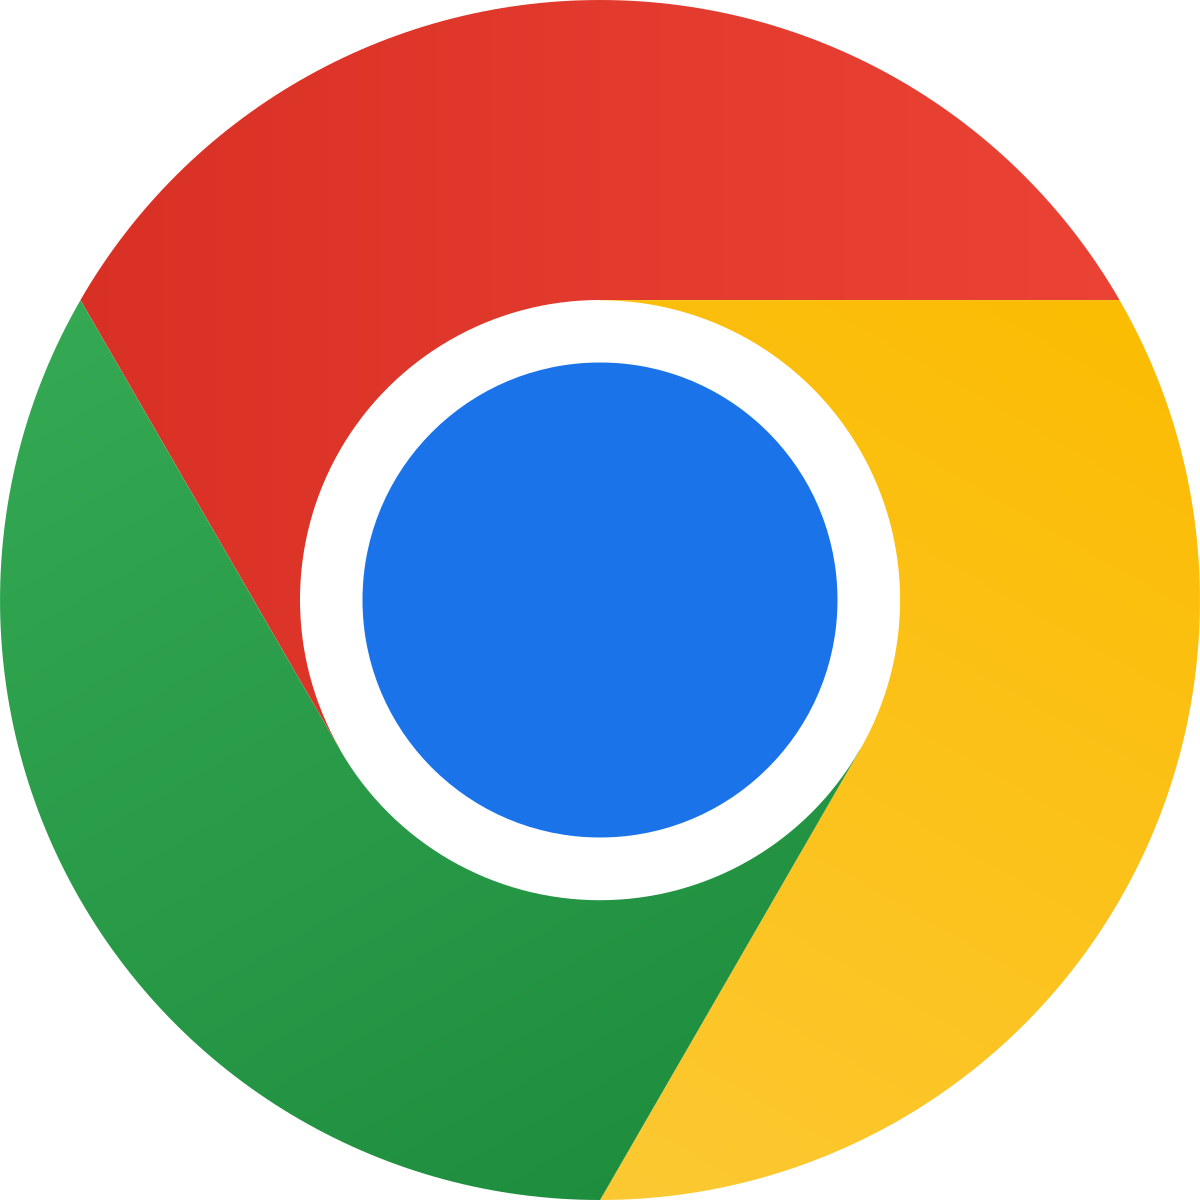 Web browser icons (e.g. Chrome, Firefox, Safari)